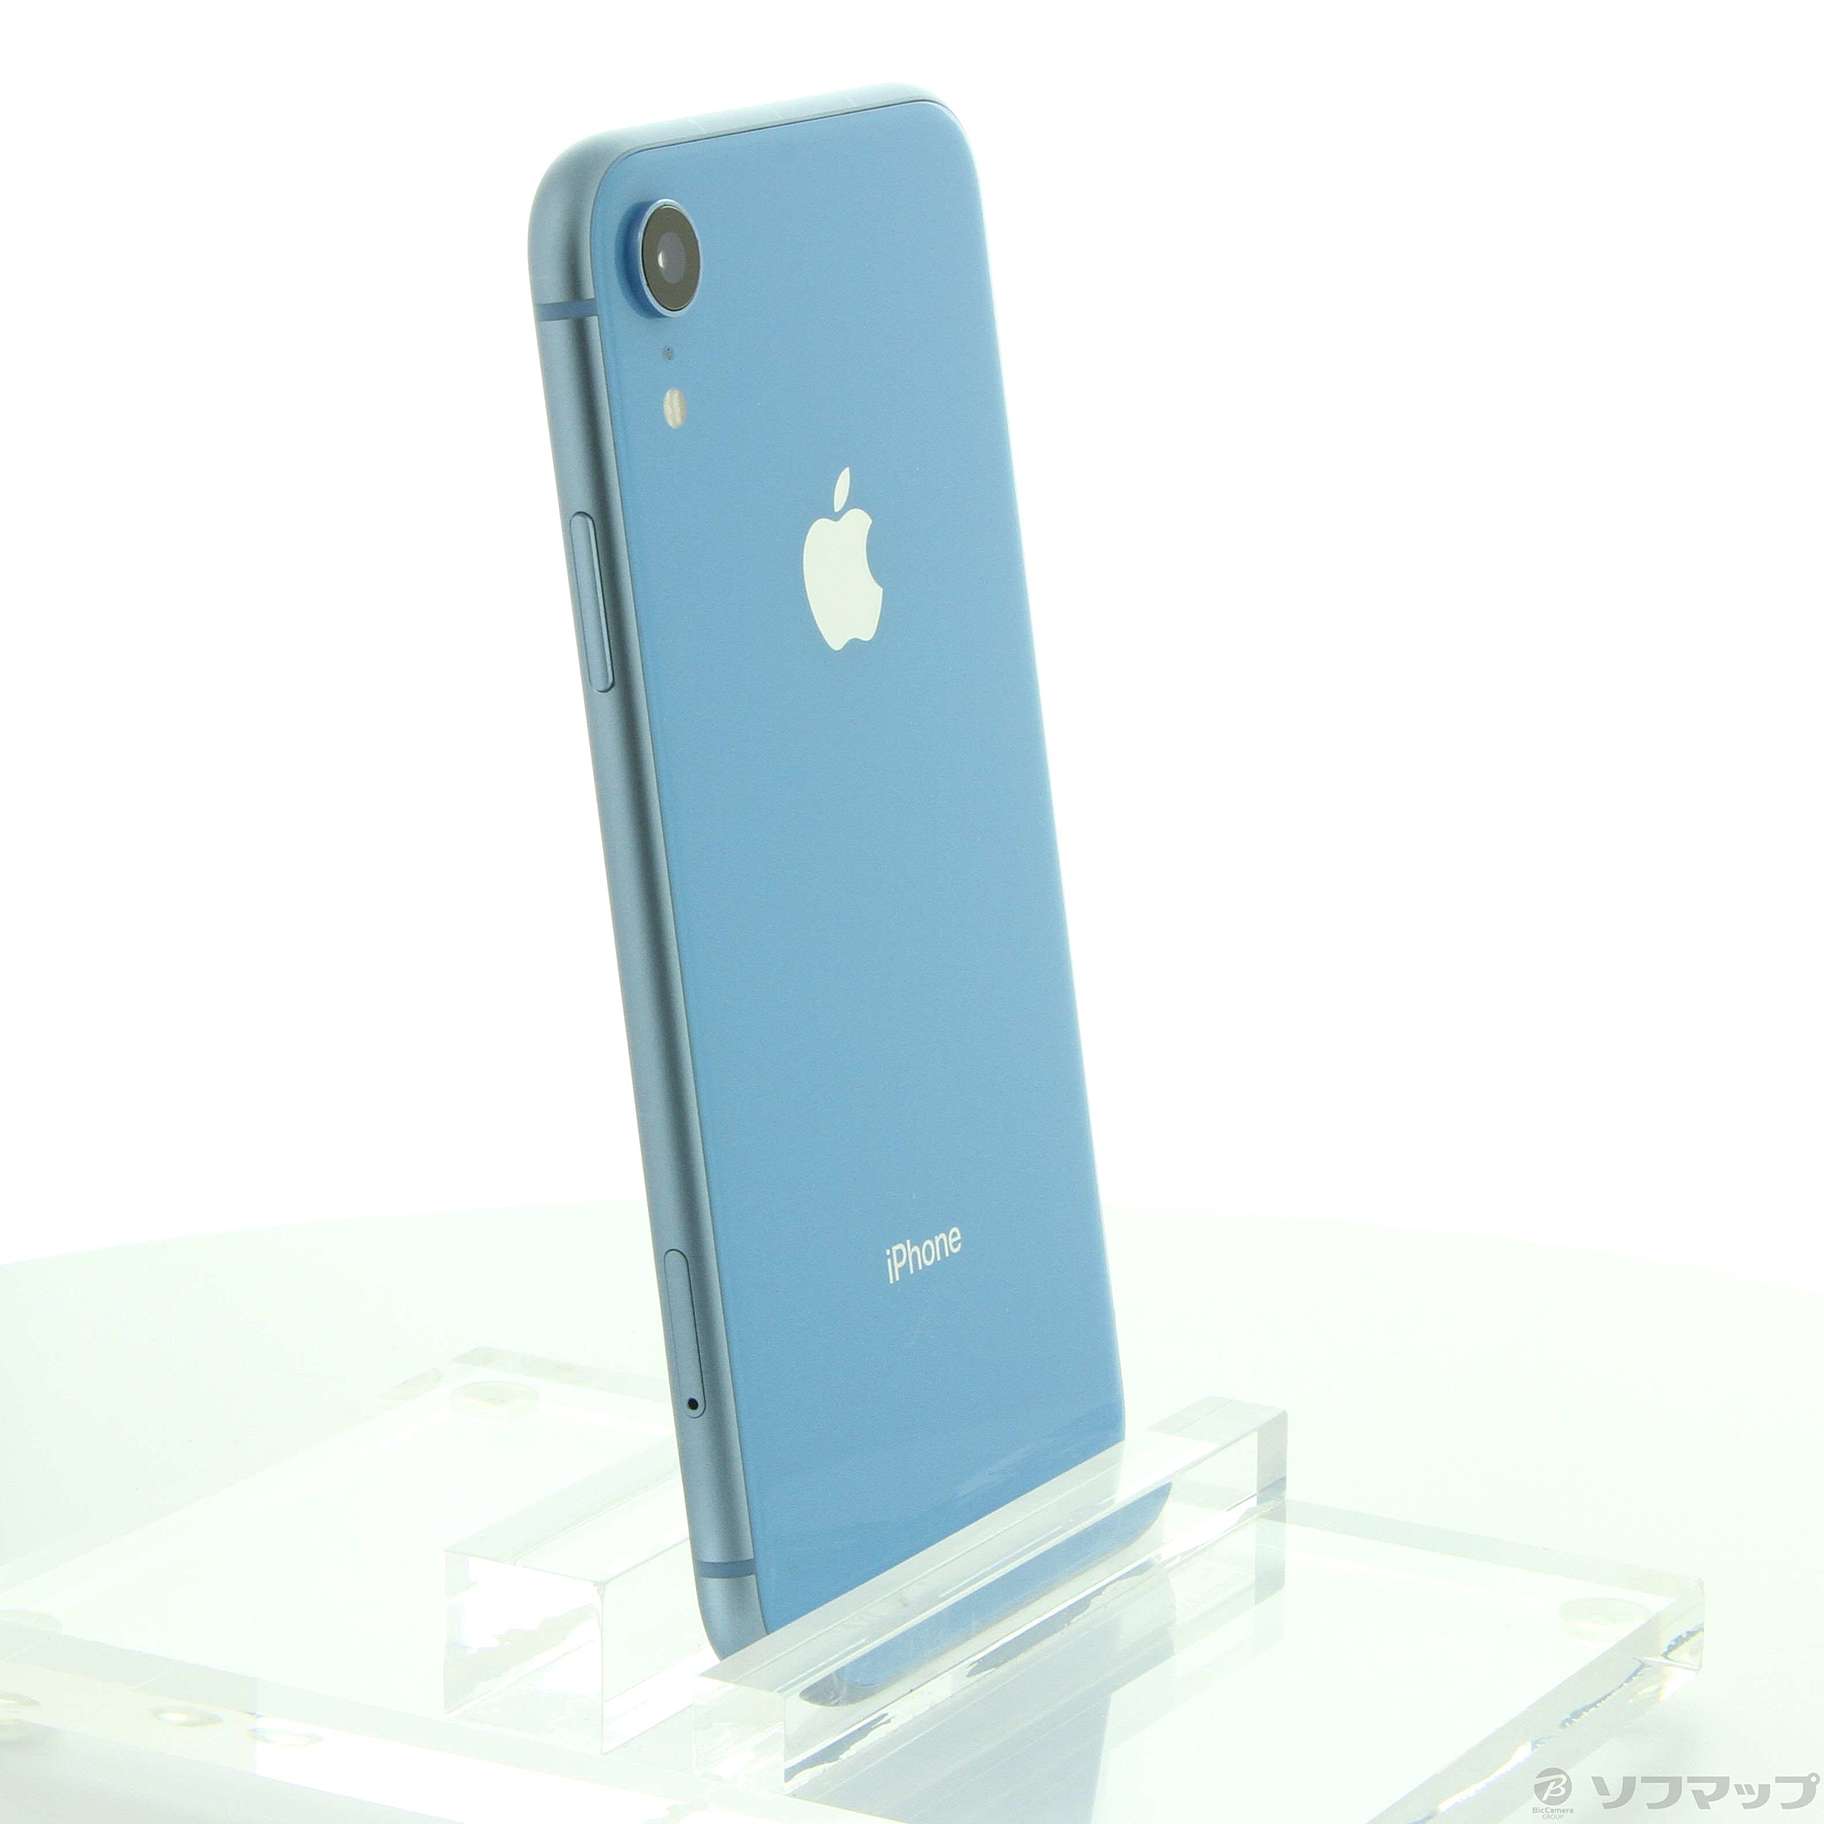 iPhone XR Blue 128 GB Softbank